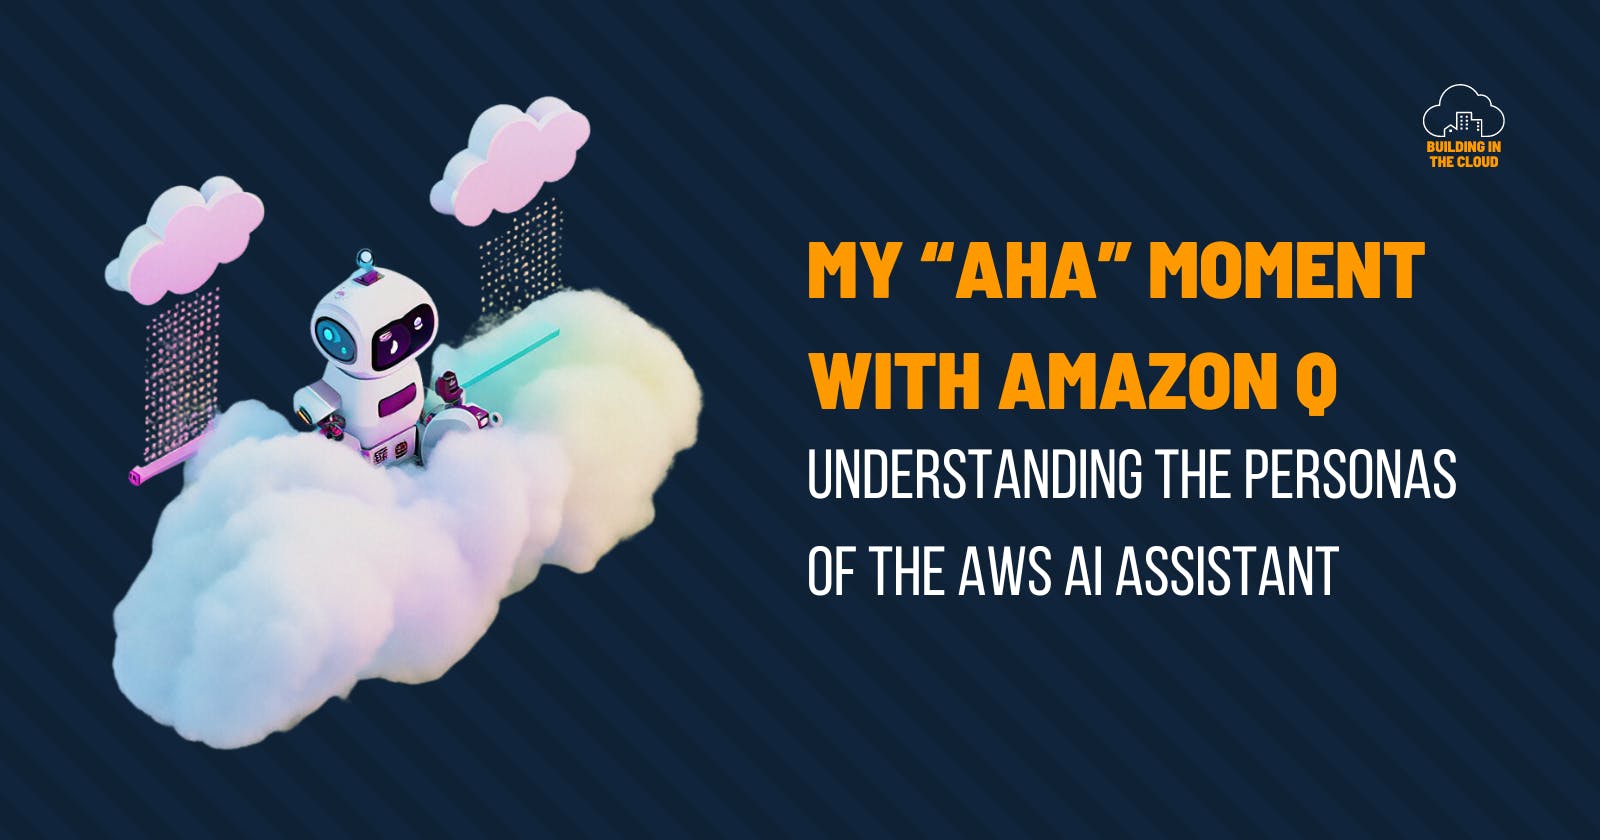 My "Aha!" Moment with Amazon Q